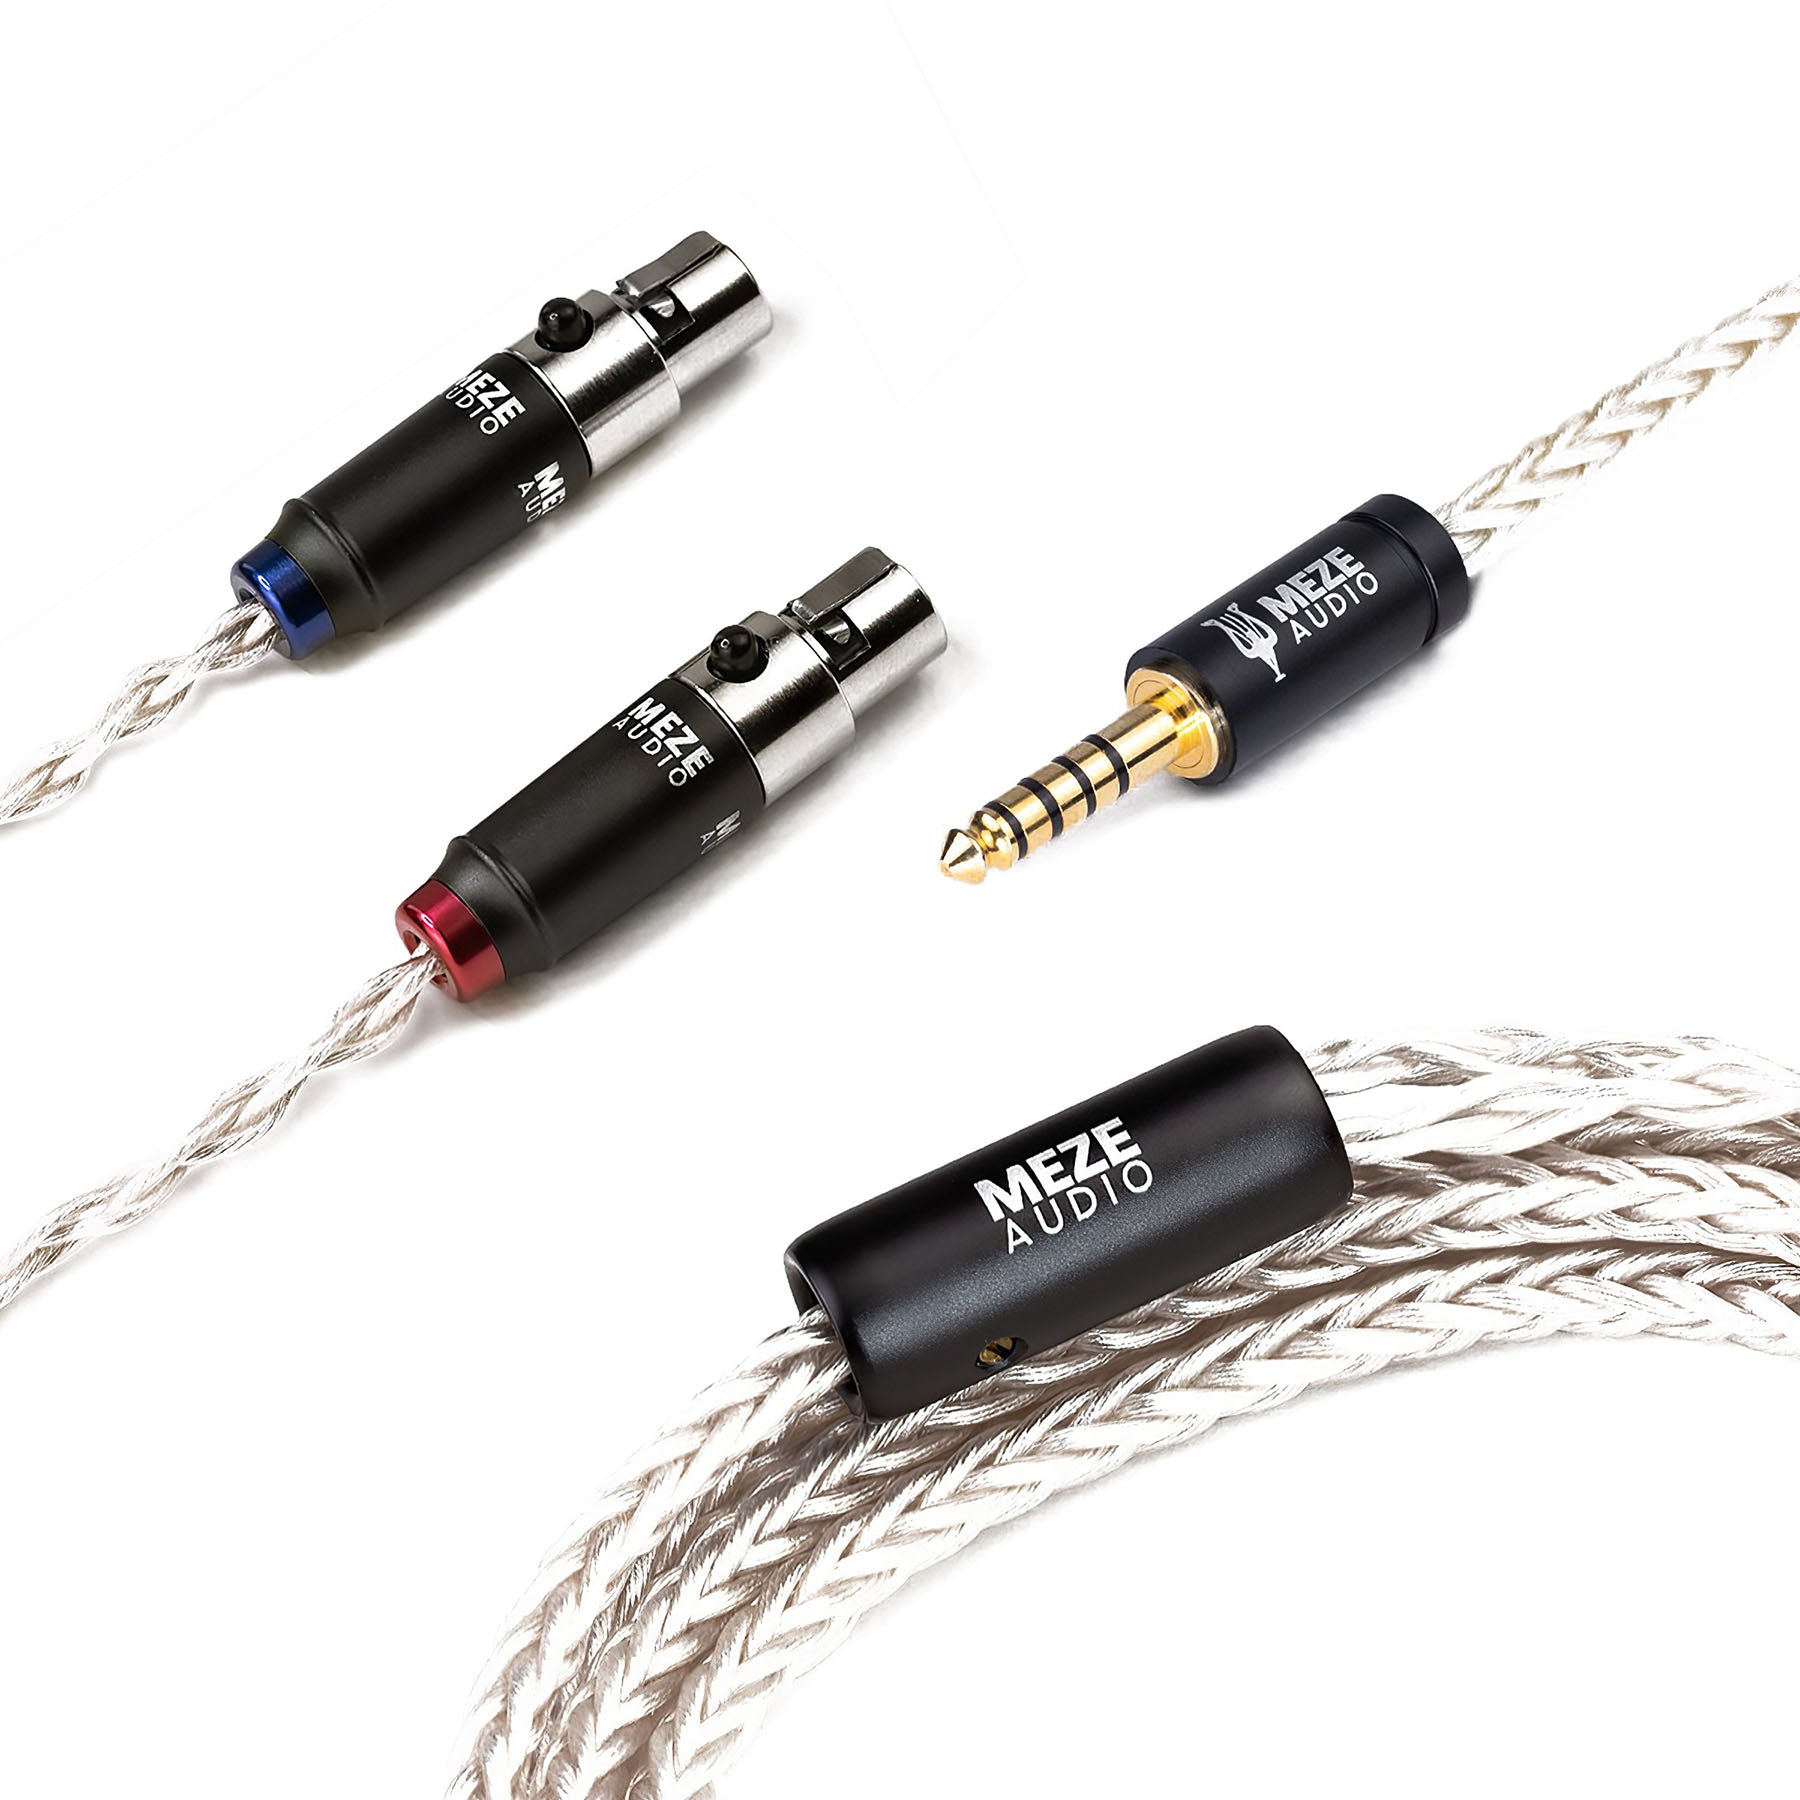 Meze Audio Mini XLR to 4-pin XLR Balanced Silver Plated PCUHD Premium Cable